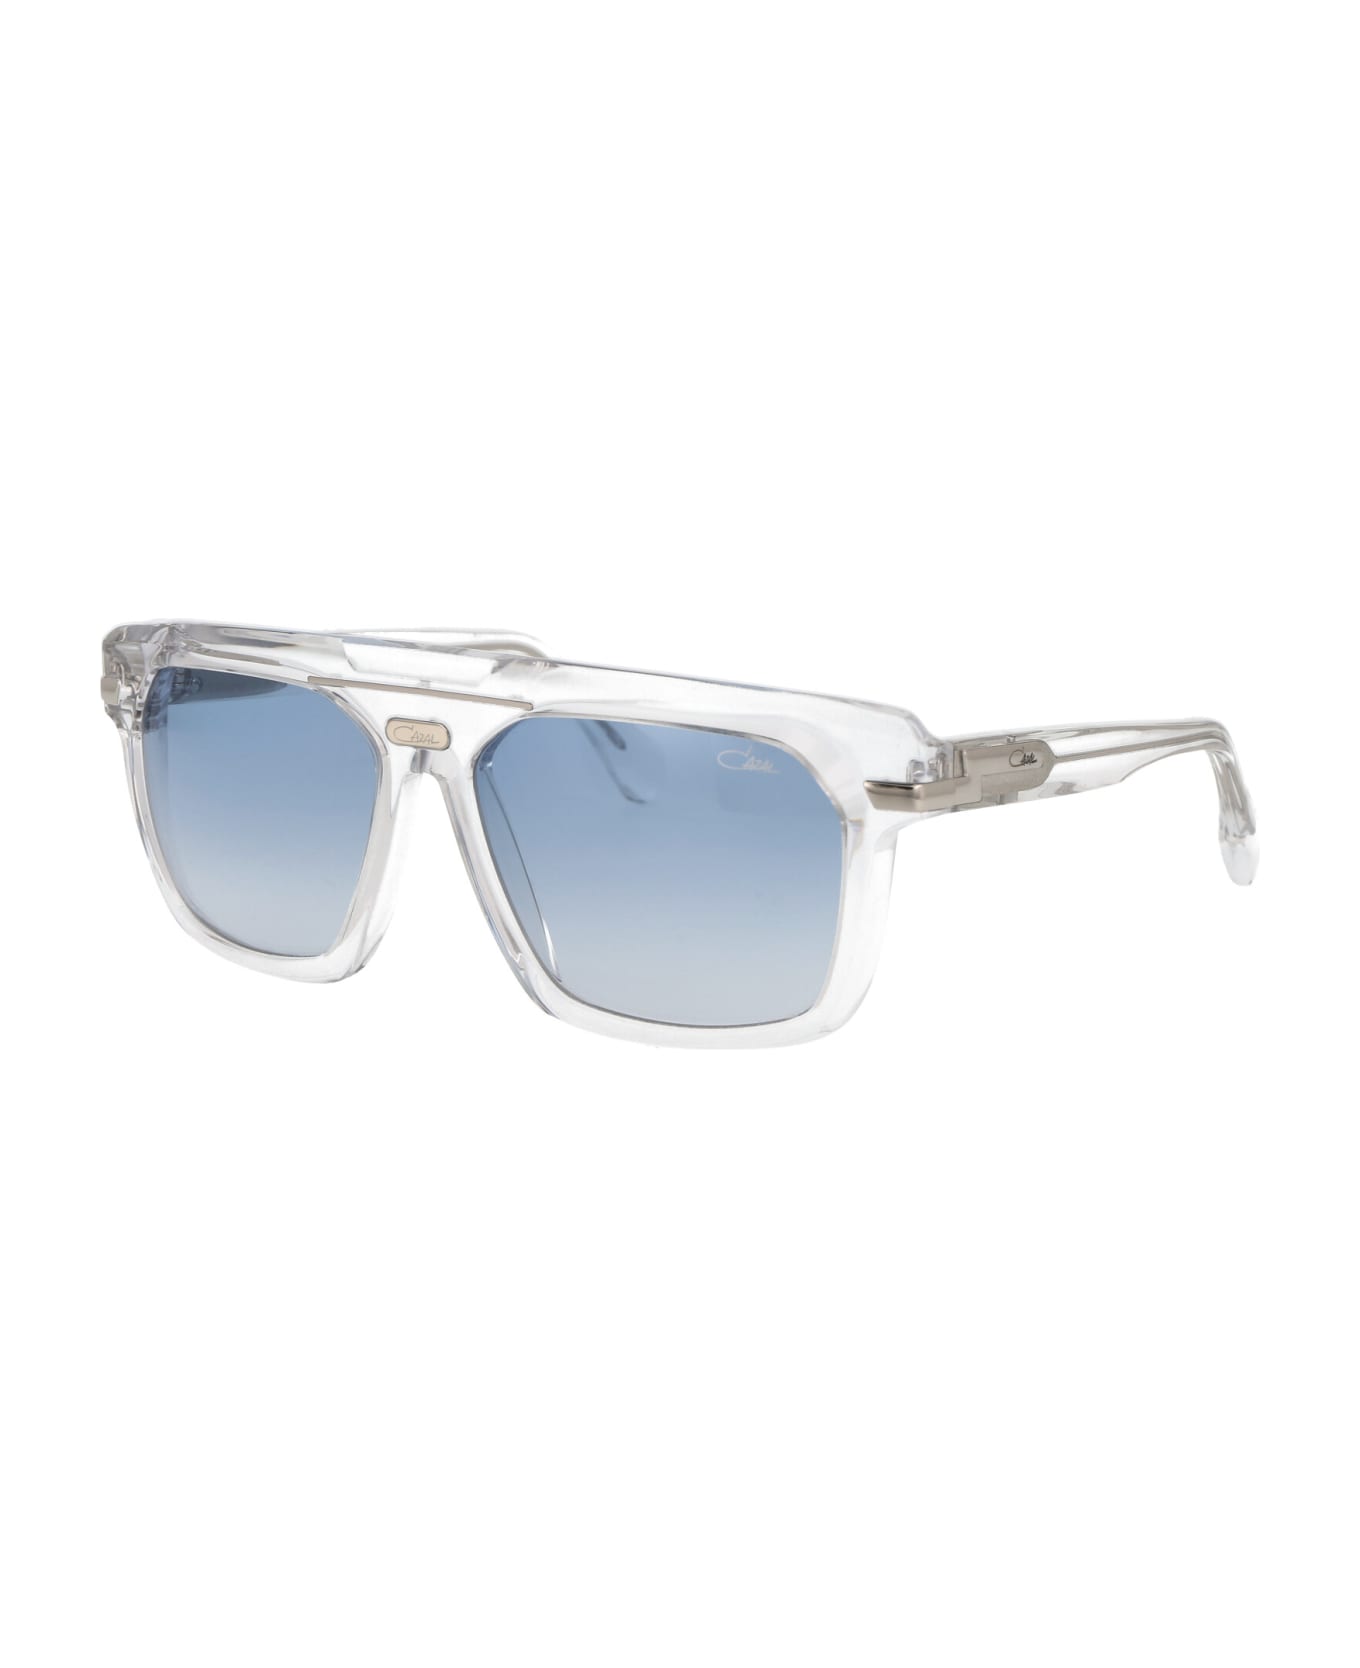 Cazal Mod. 8040 Sunglasses Men - 002 CRYSTAL